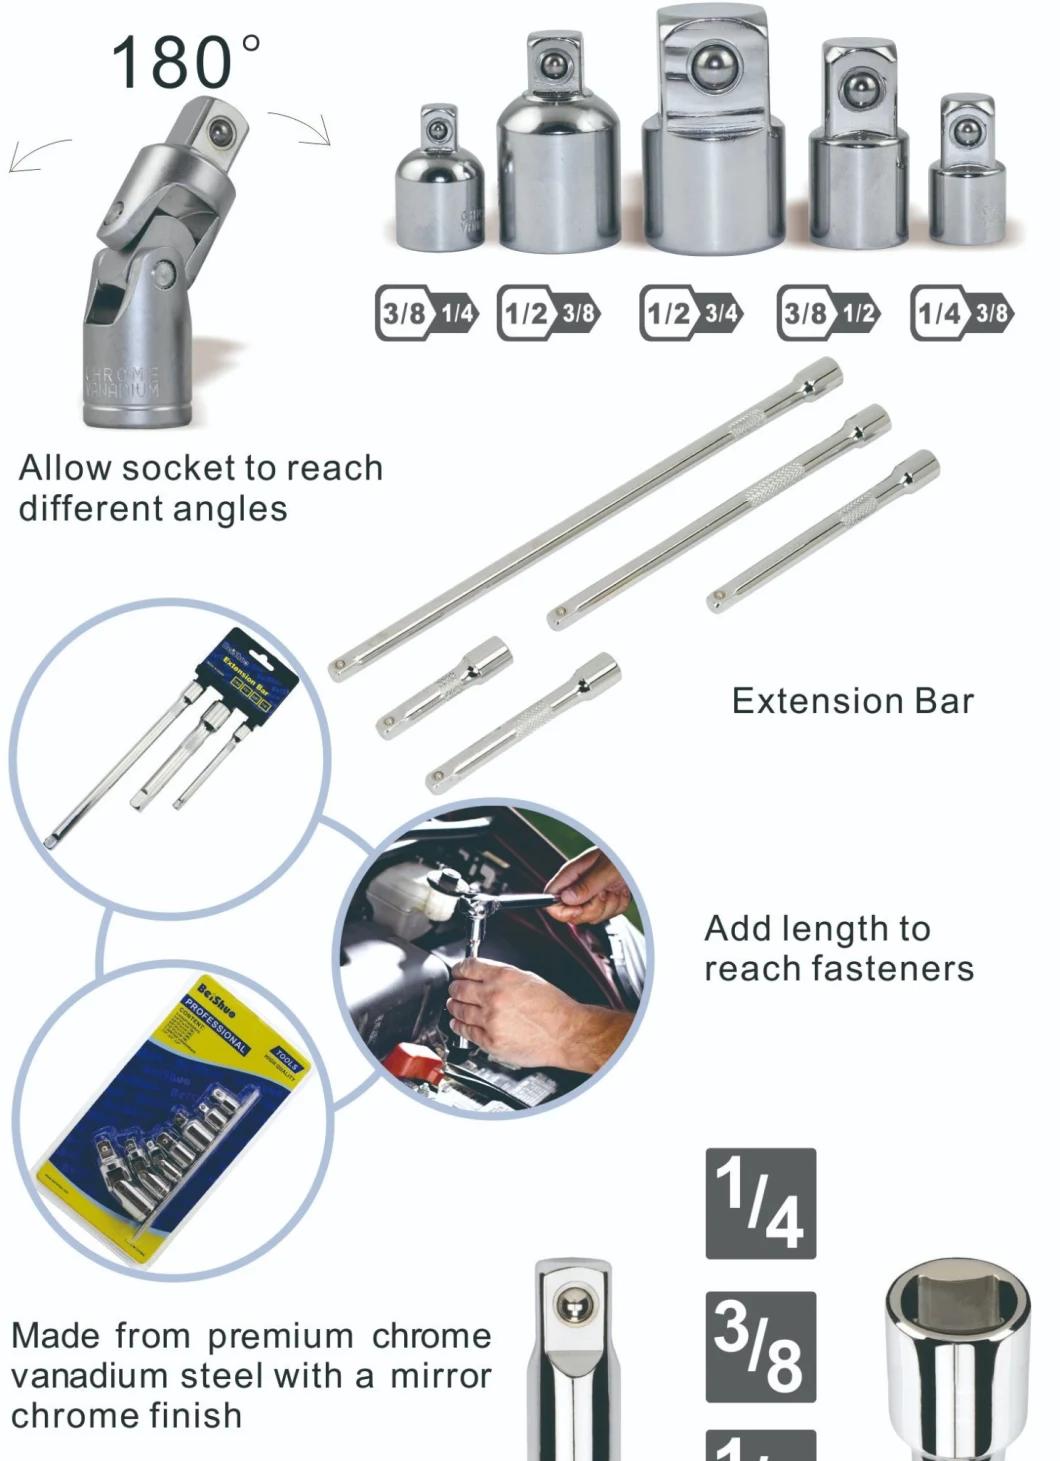 1/2′′ 1/4′′ 3/8′′ Drive Sliding T-Handle Bar Hand Tool Accessory